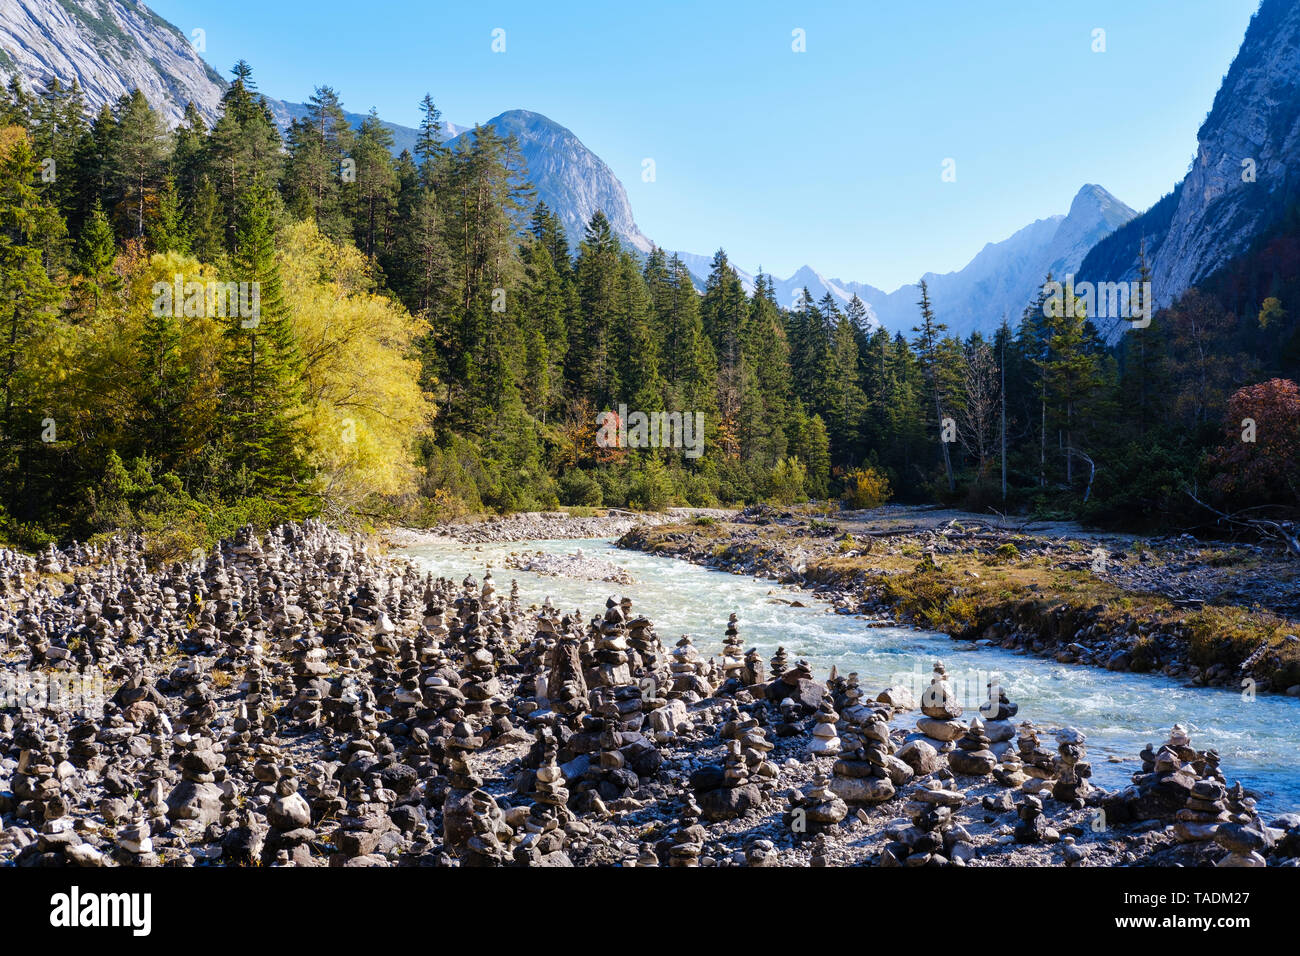 Austria, Tyrol, Karwendel mountains, Hinterautal, cairns at River Isar Stock Photo